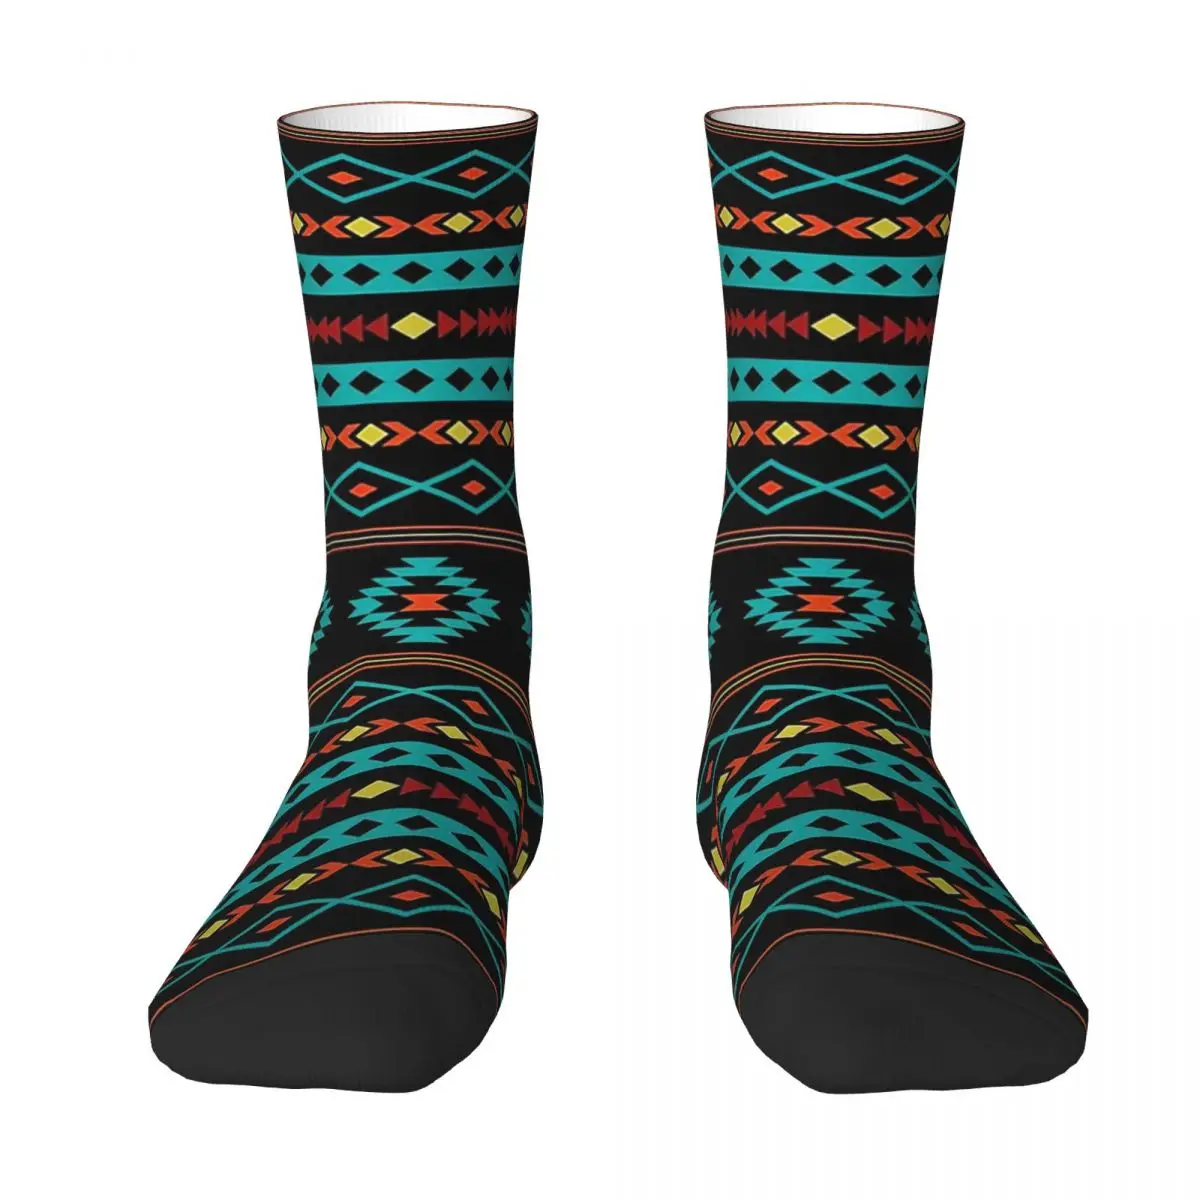 Aztec Teal Reds Yellow Black Mixed Motifs Pattern Adult Socks Unisex socks,men Socks women Socks